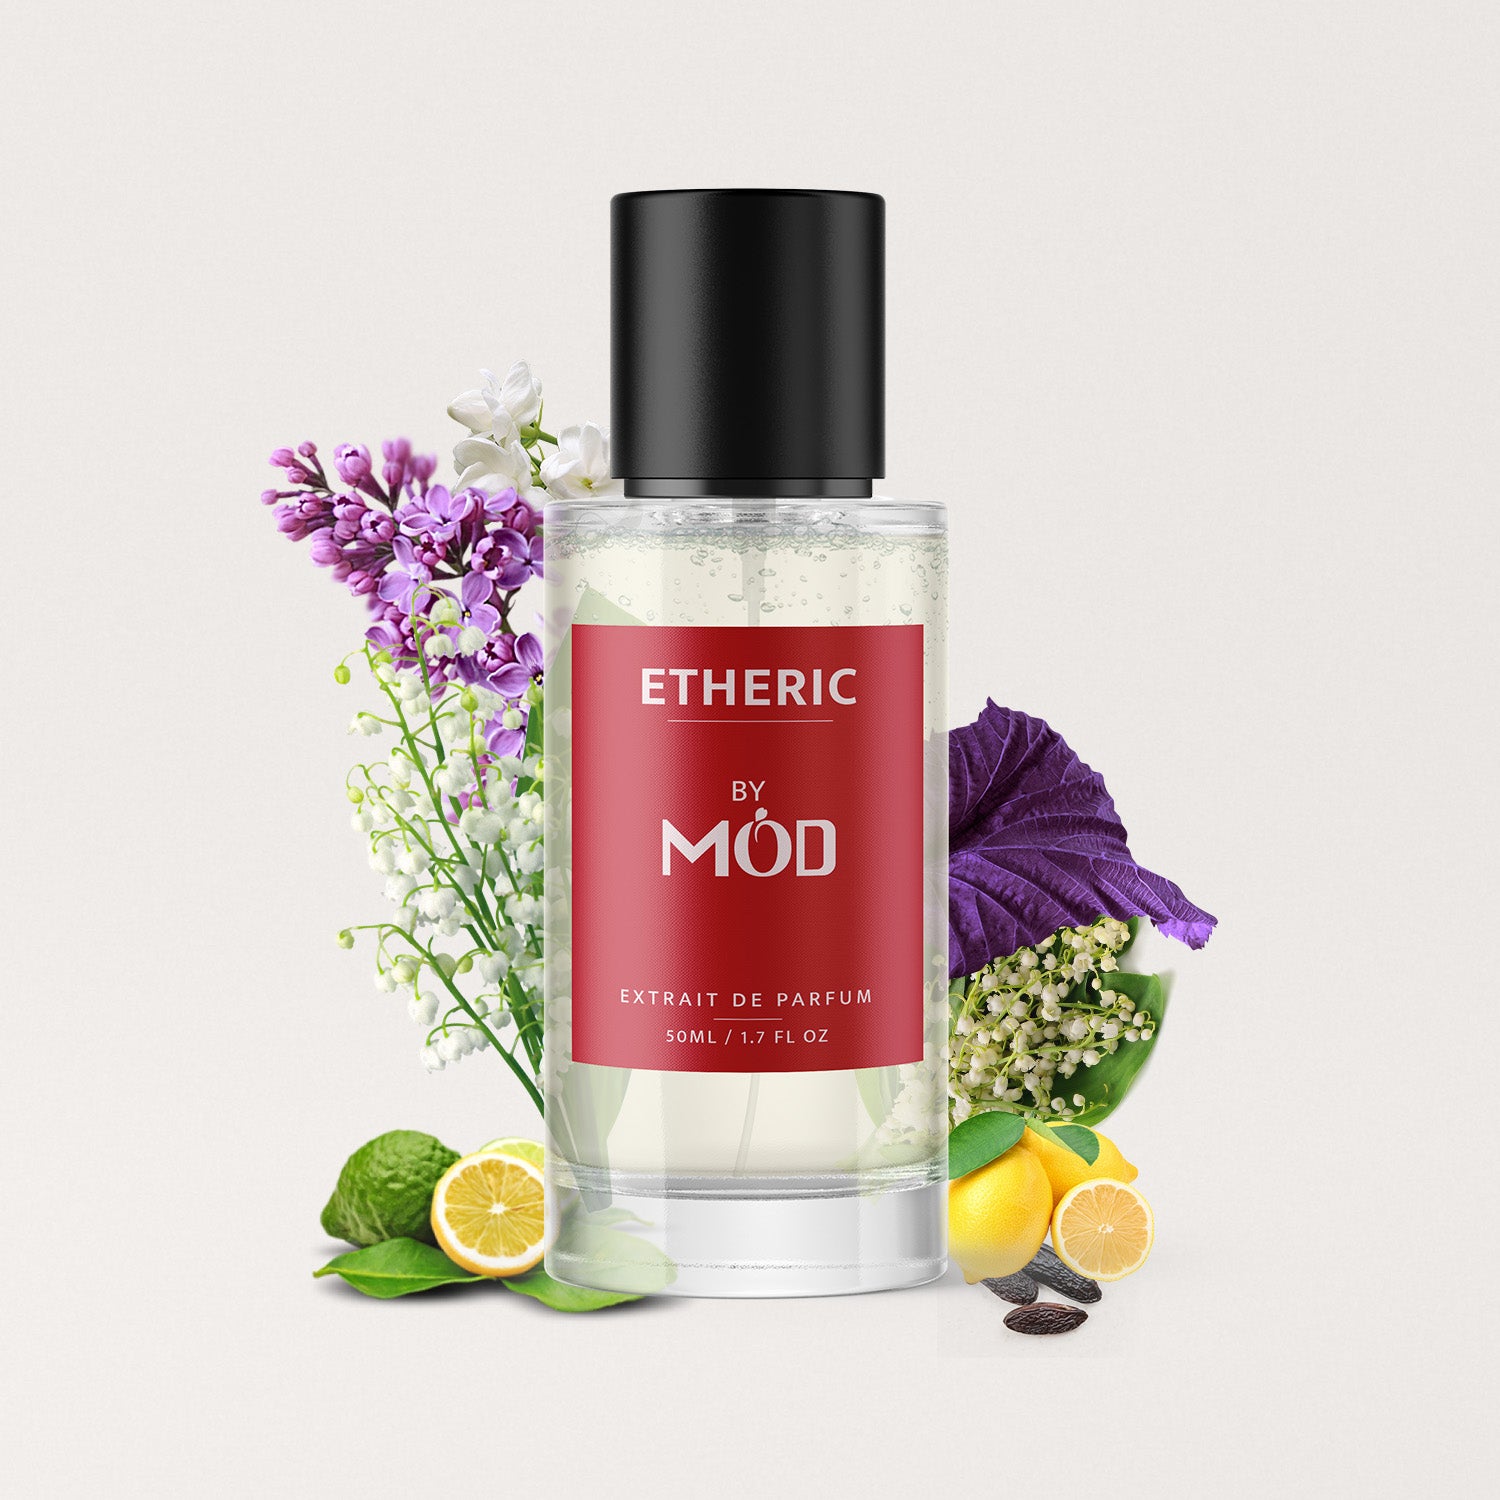 Etheric - Mod Fragrances